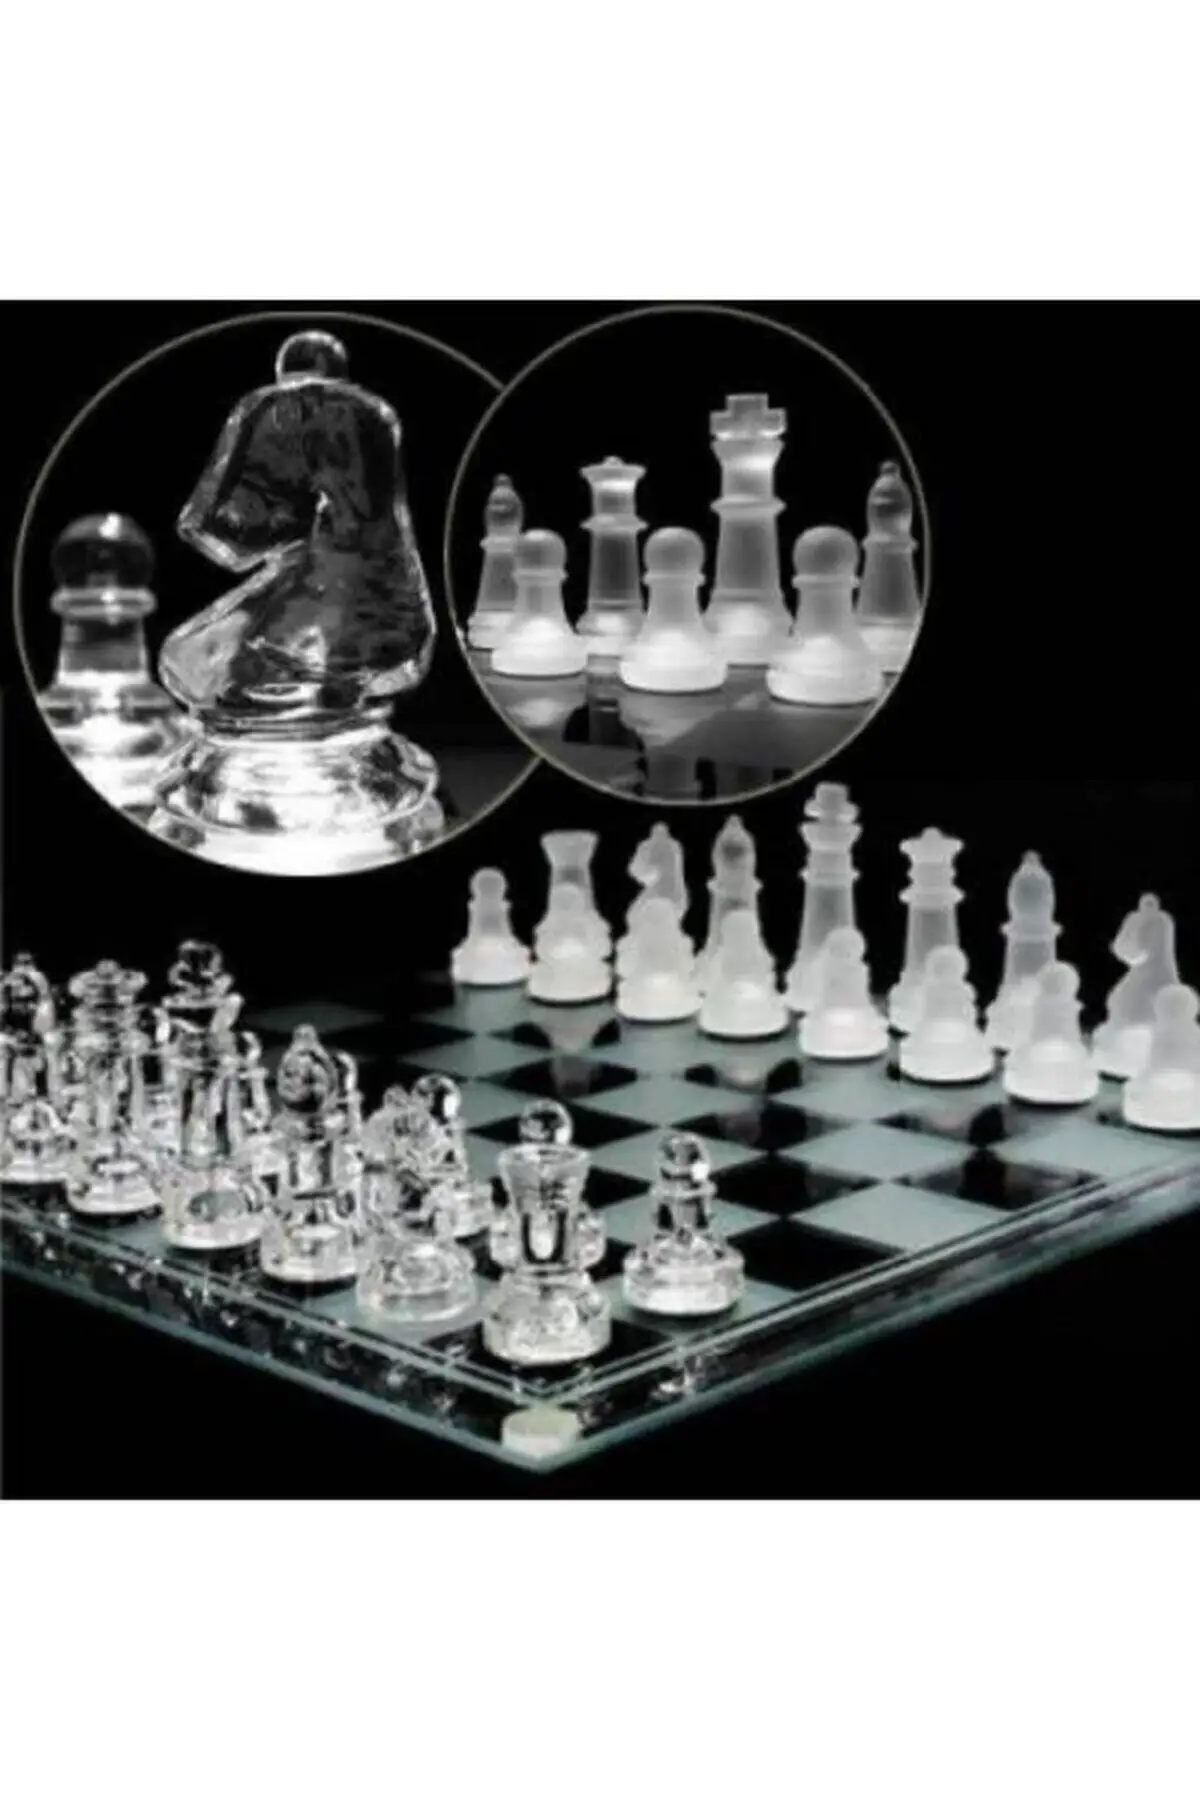 Premium Trade Chess Glass Set 20Cm X 20Cm  Large Acrylic Chessboard Anti-Broken Elegant Glass Chess Pieces Chess Game Chess Set